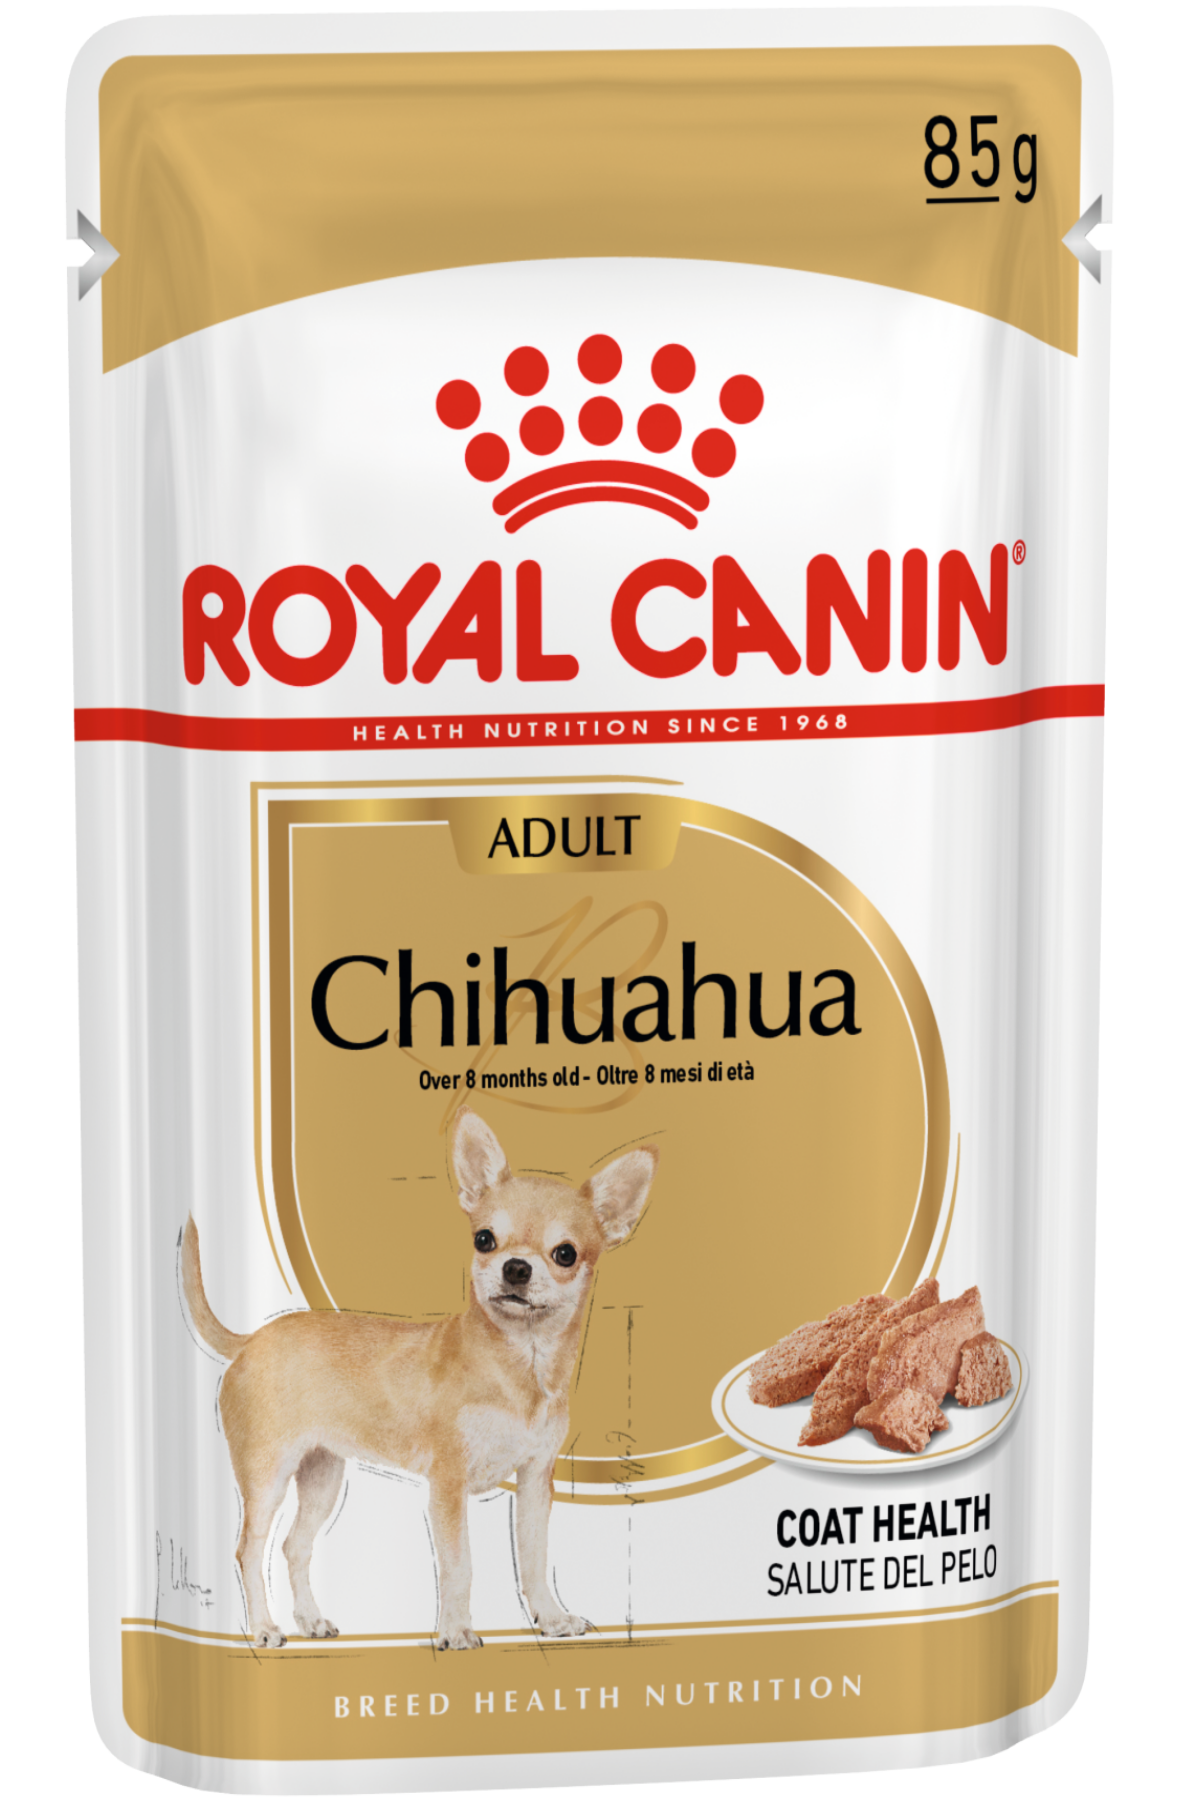 Royal Canin Chihuahua Adult Köpek Konservesi 85gr